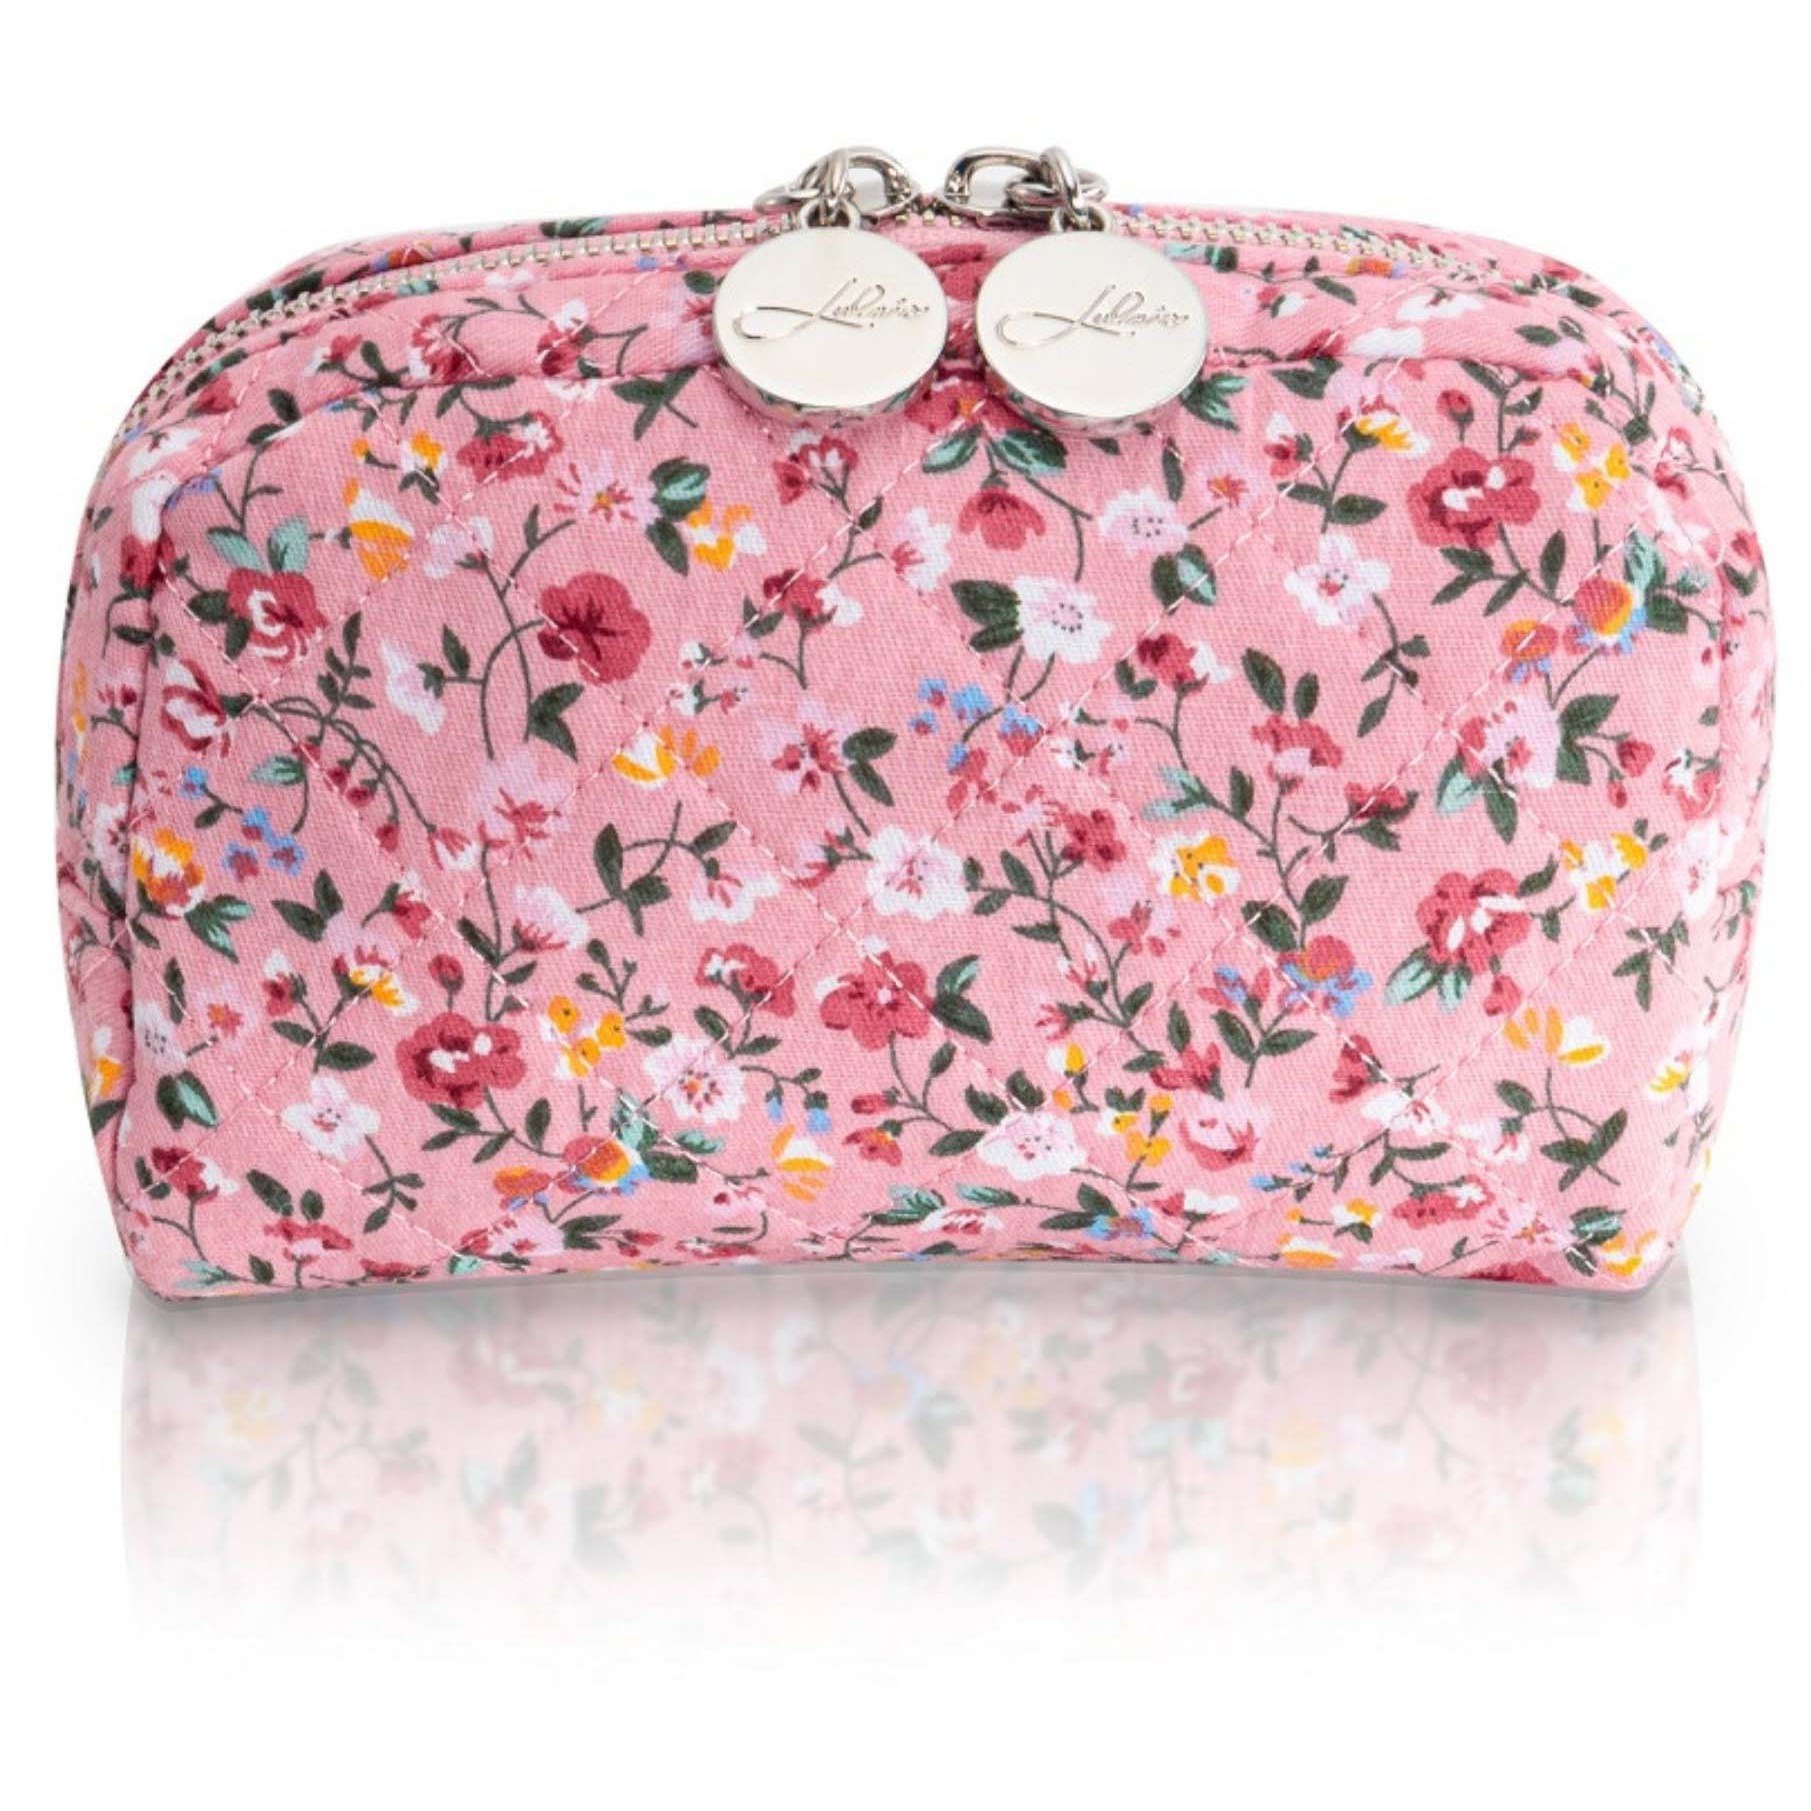 Bilde av Lulu's Accessories Cosmetic Bag Small Floral Rose